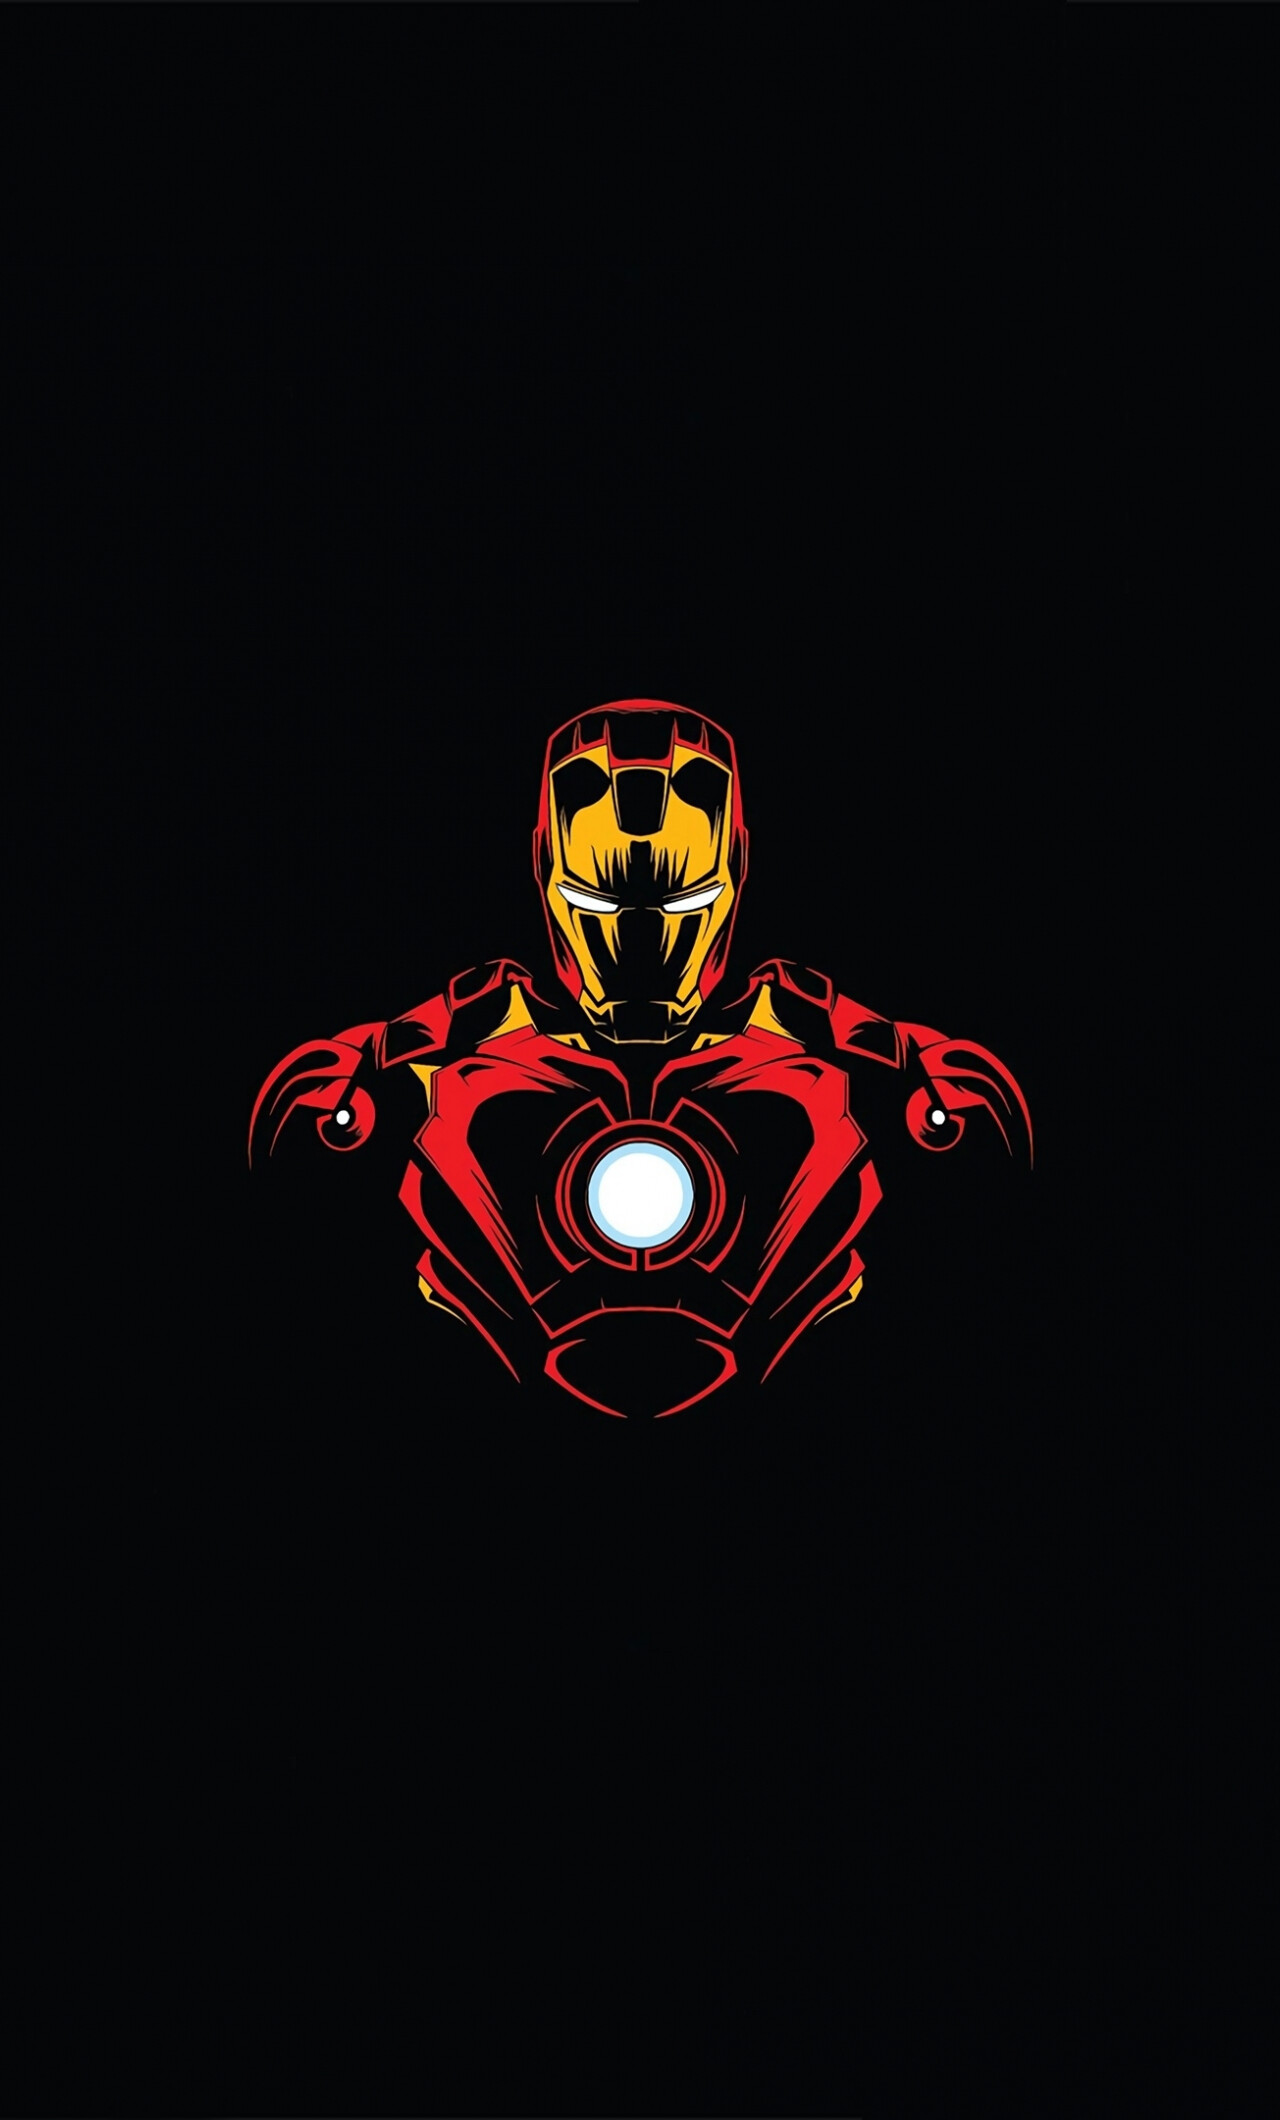 Marvel Heroes: Iron Man, A superhero appearing in American comic books, Minimalistic. 1280x2120 HD Wallpaper.